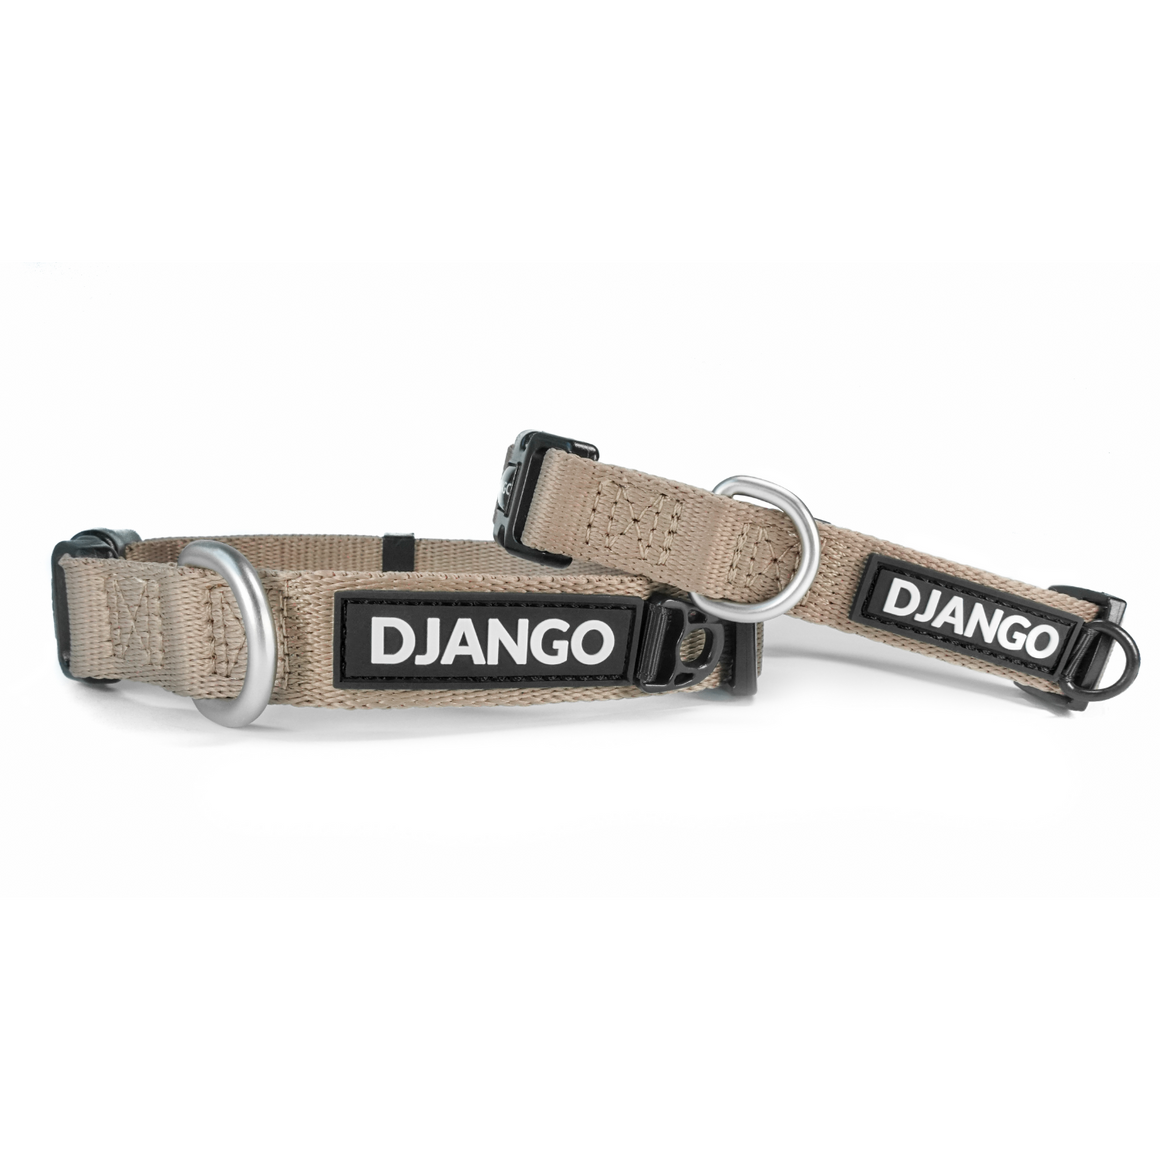 DJANGO Tahoe Dog Collar in Alpine Blue - Comfortable, durable, and adventure-ready dog collar - djangobrand.com